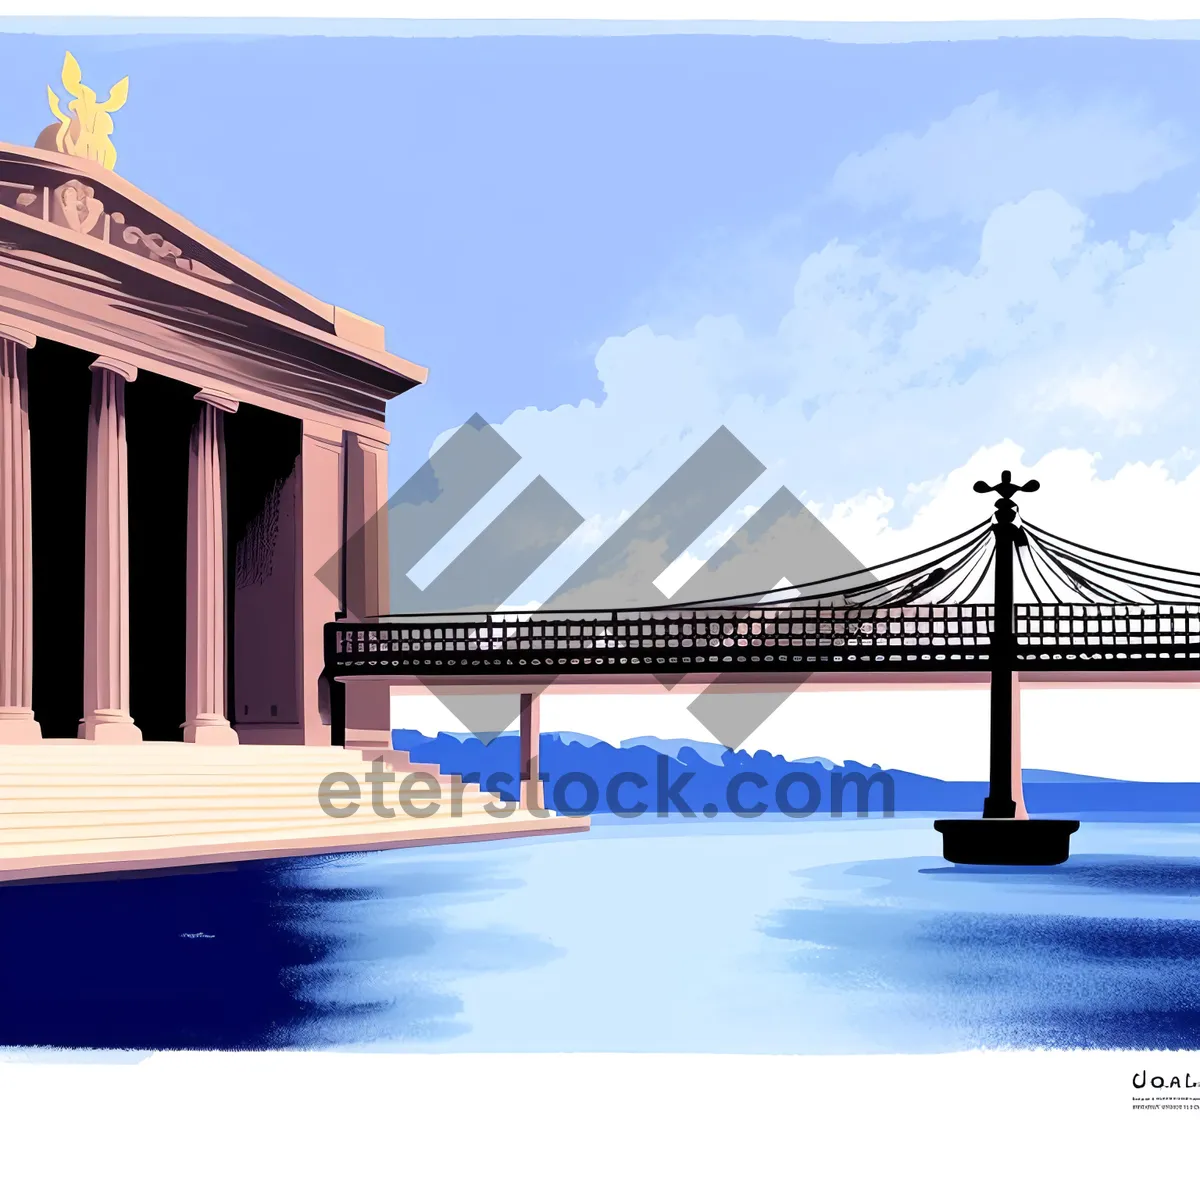 Picture of Iconic Suspension Bridge over City's Glittering Bay